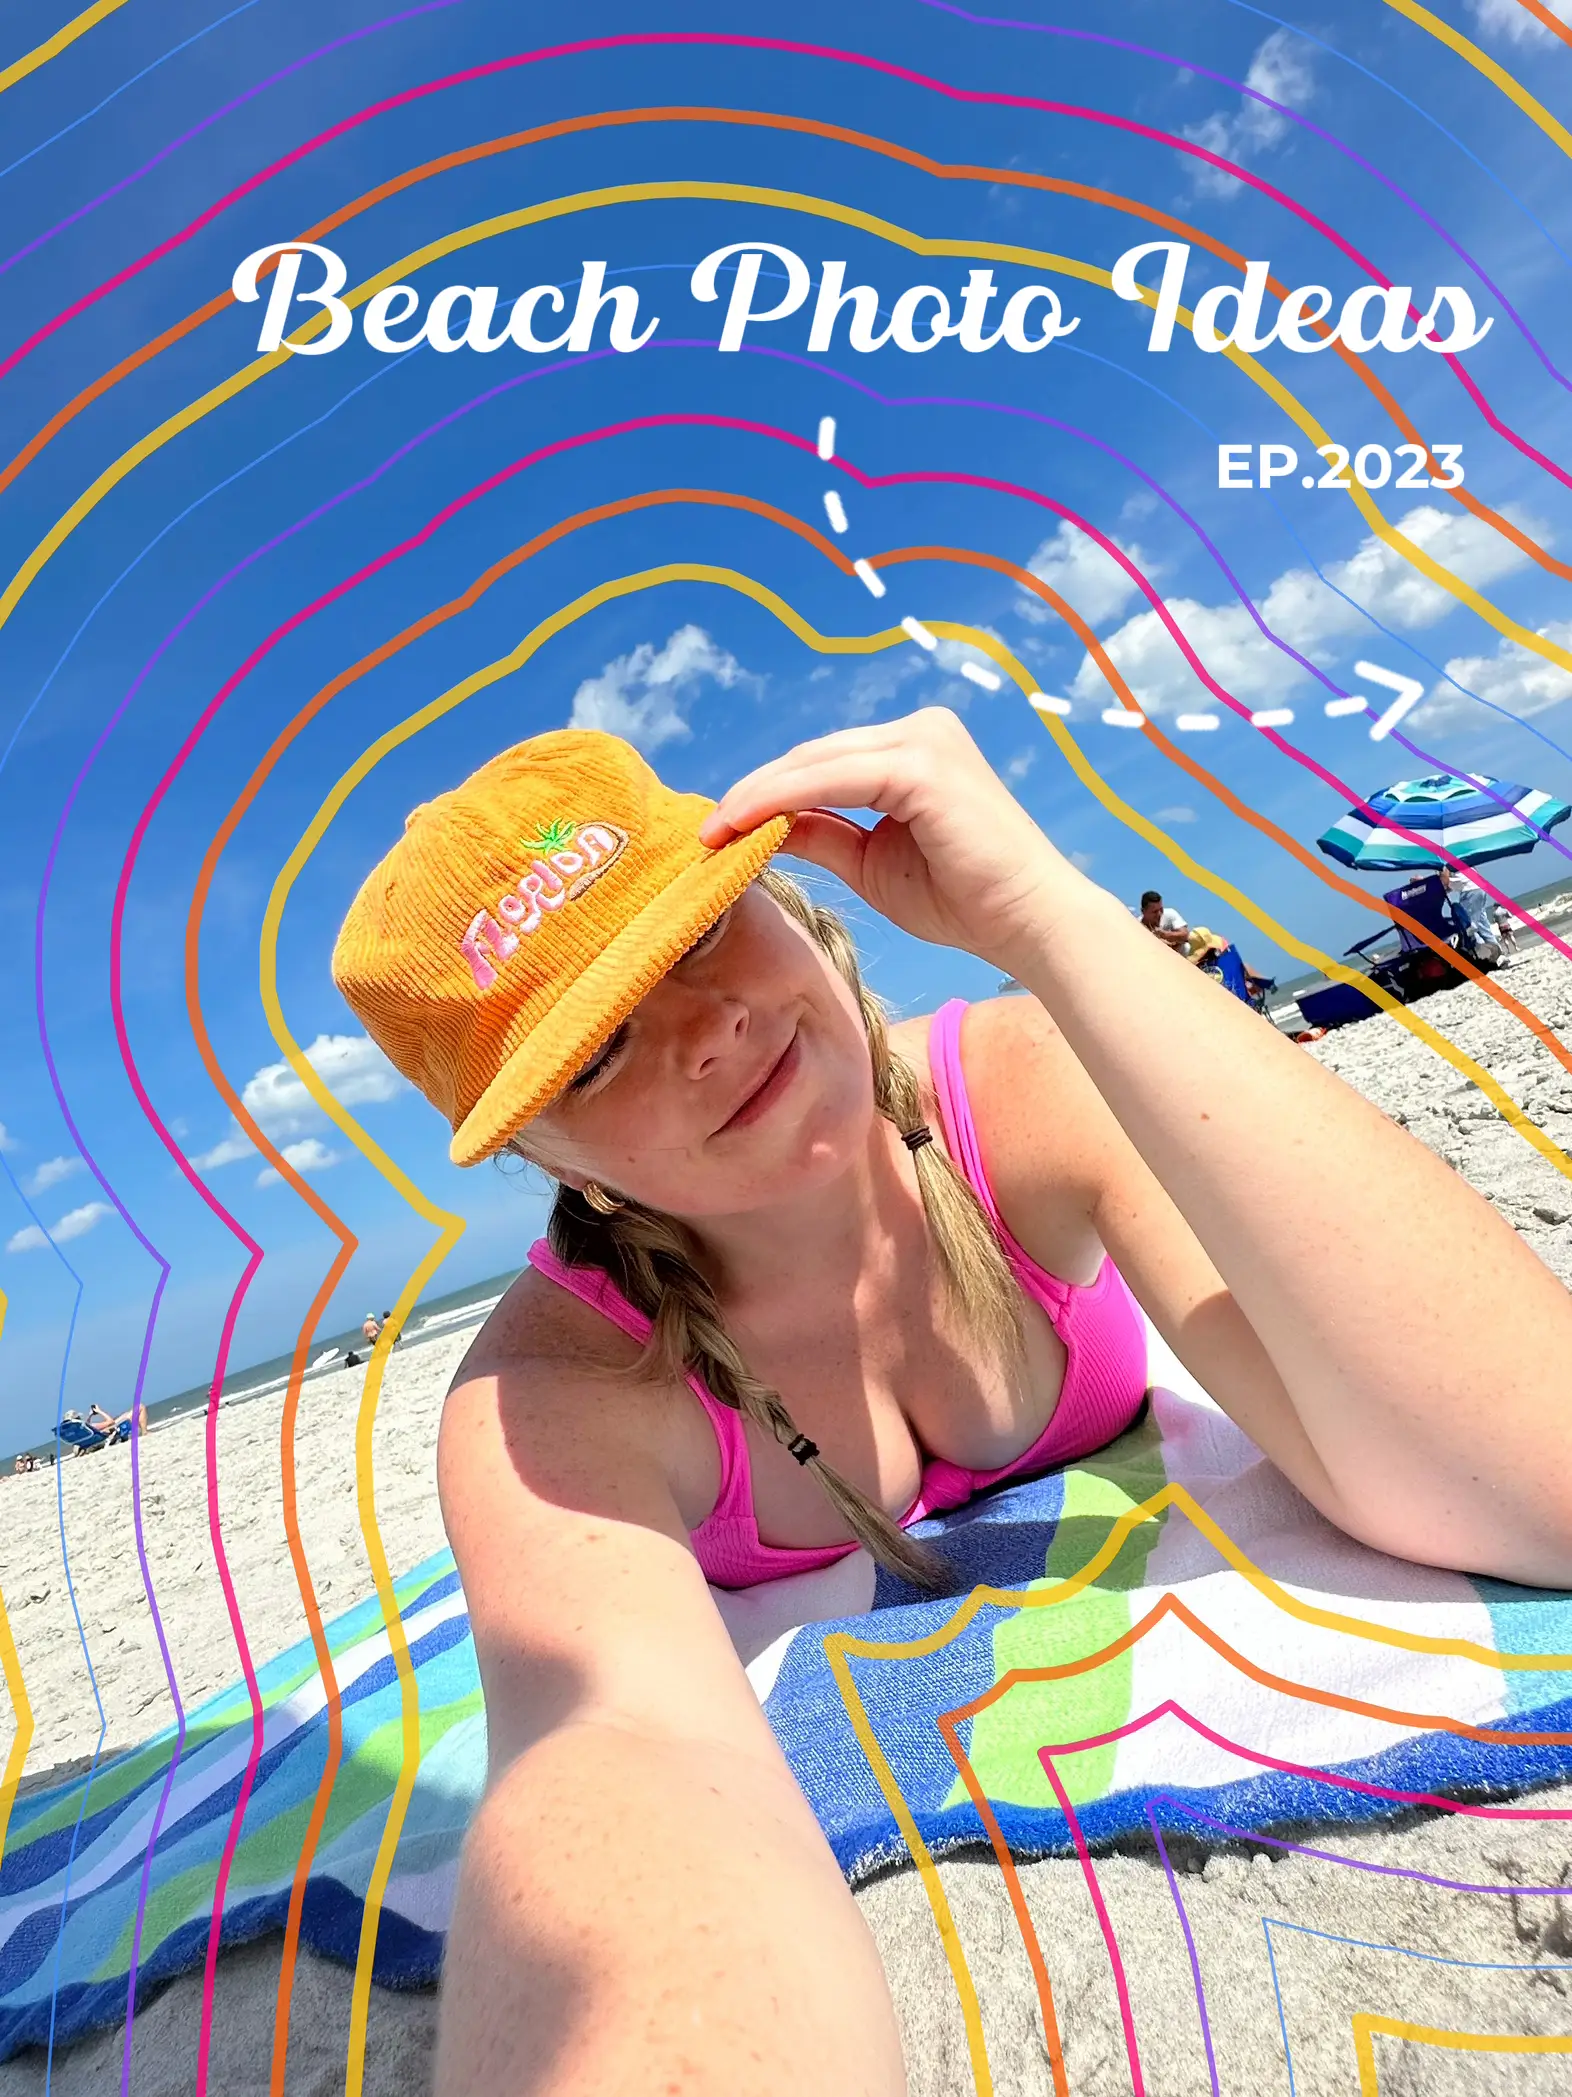 Beach Photos Ideas - Lemon8 Search